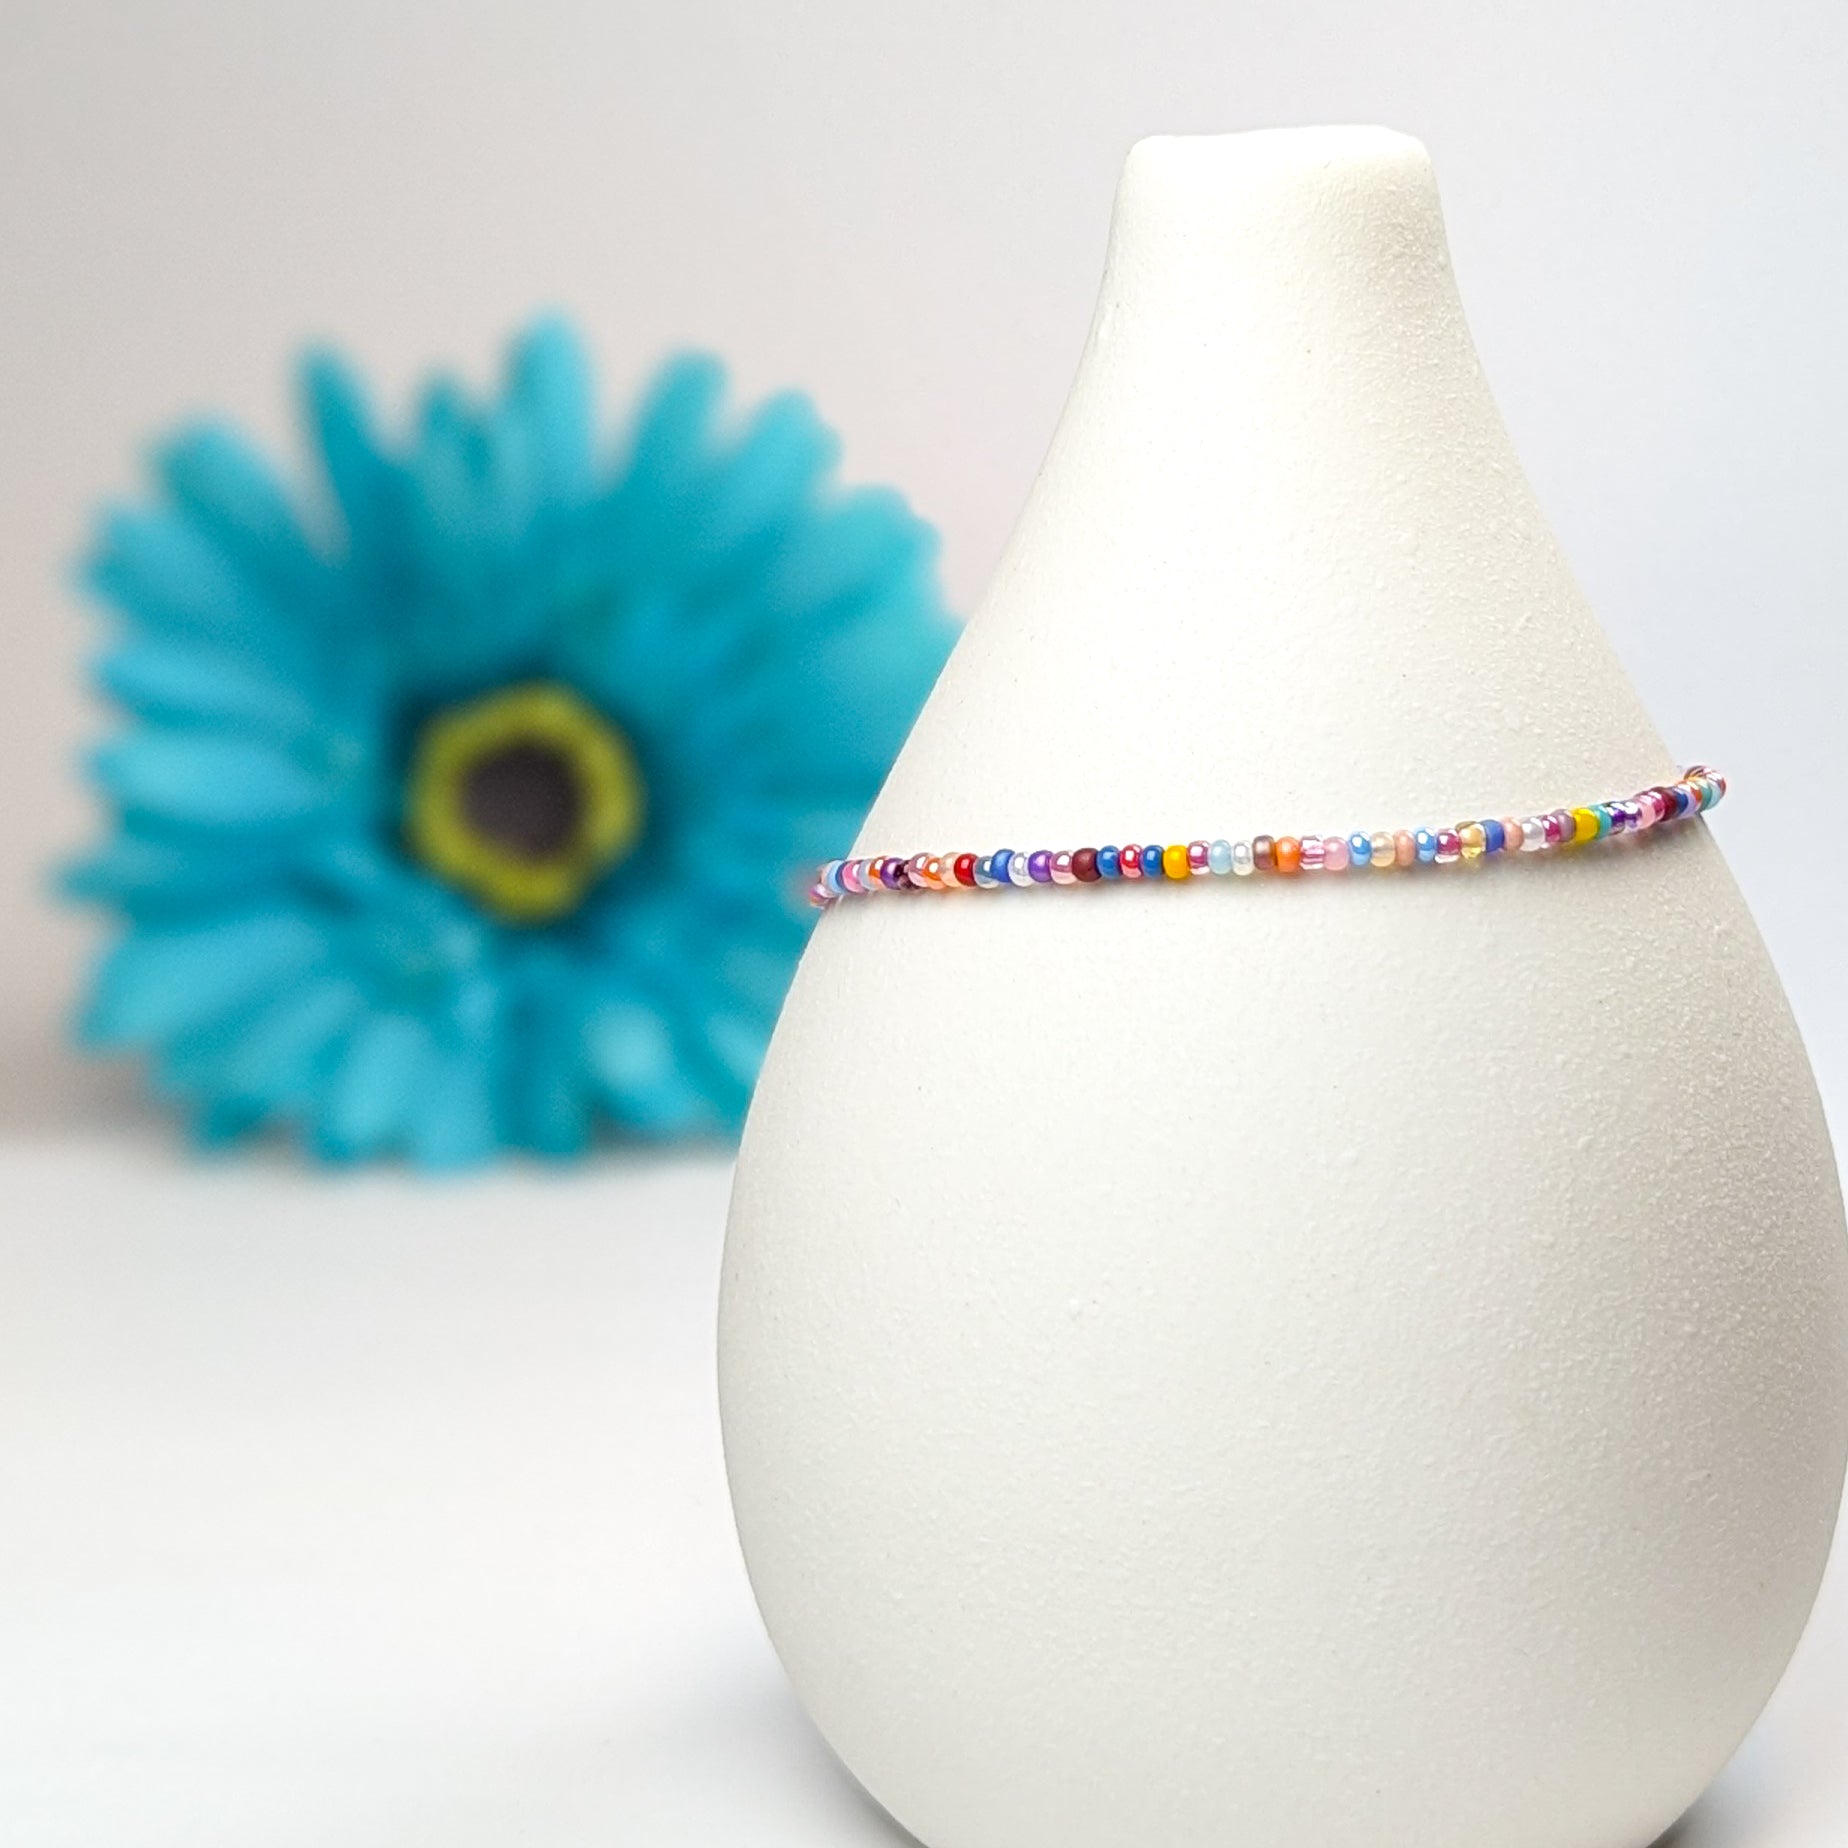 Dainty bracelet - Multicolor seed bead bracelet - creations by cherie